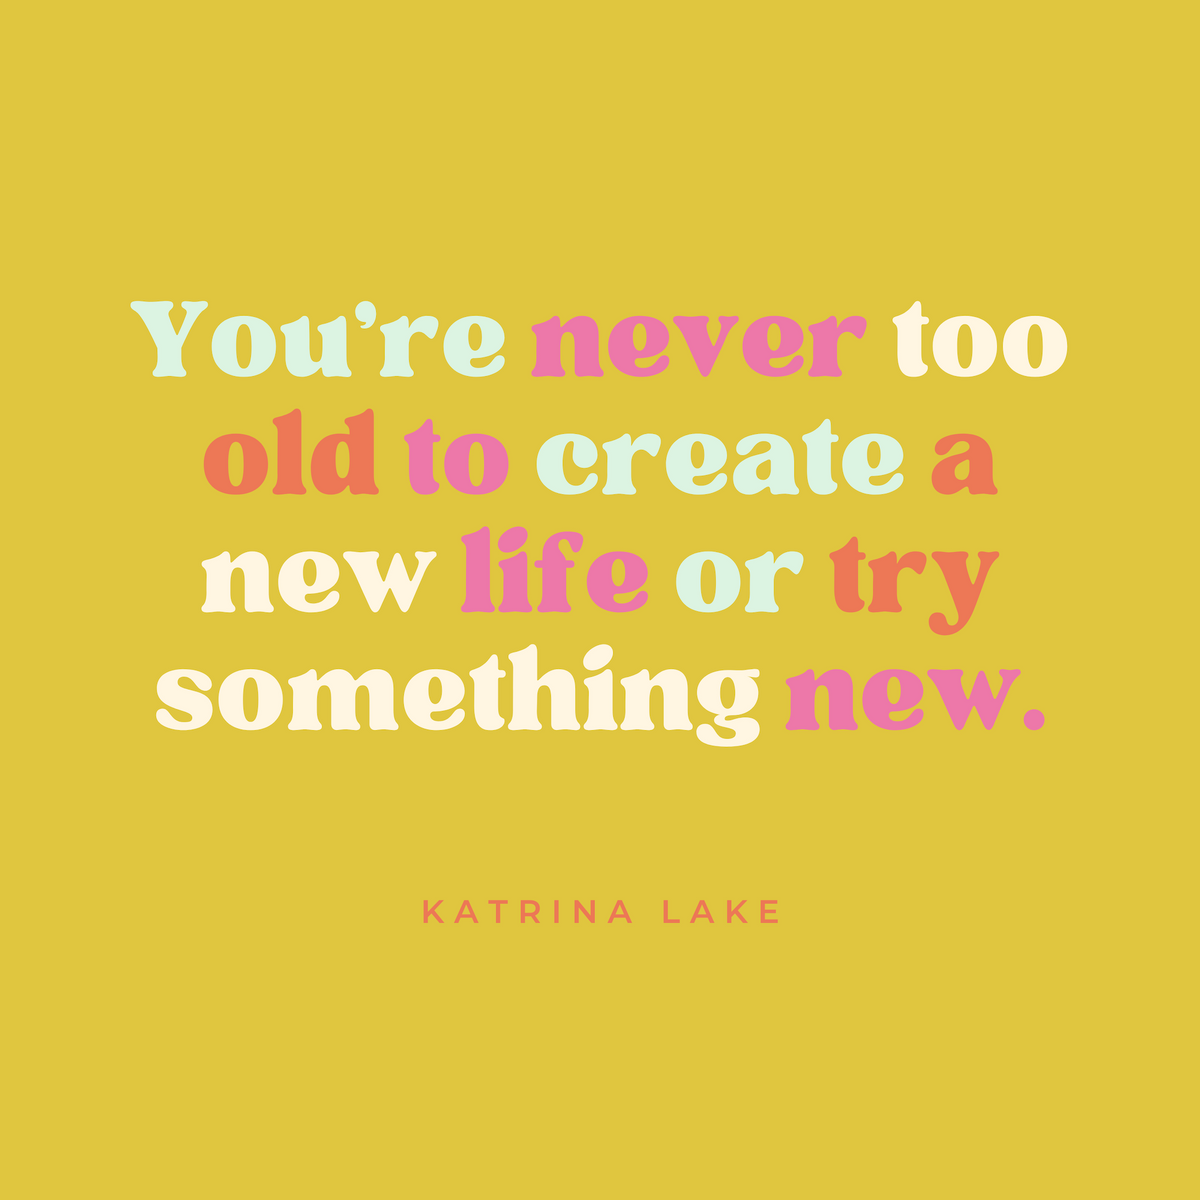 katrina lake motivational quote